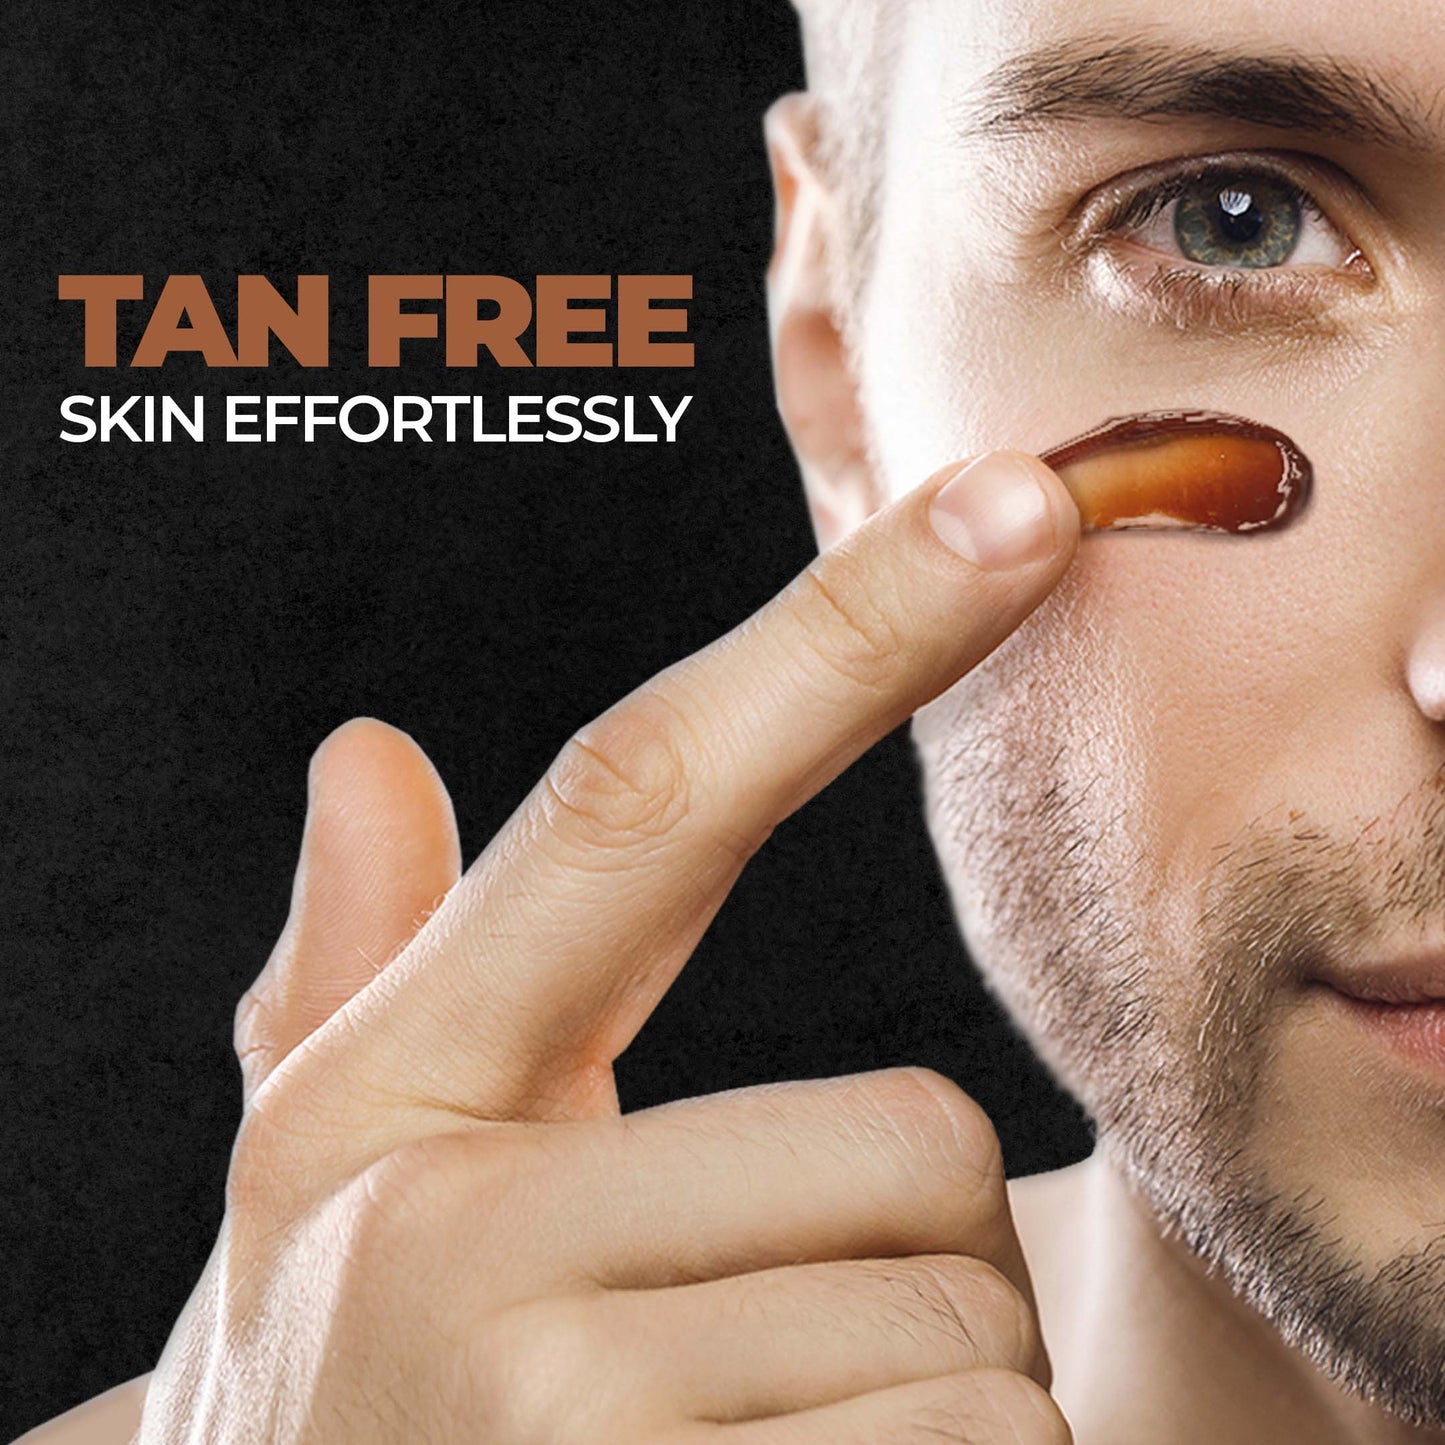 Is Beardo de Tan good for dry skin?, How do you use Beardo face gel?